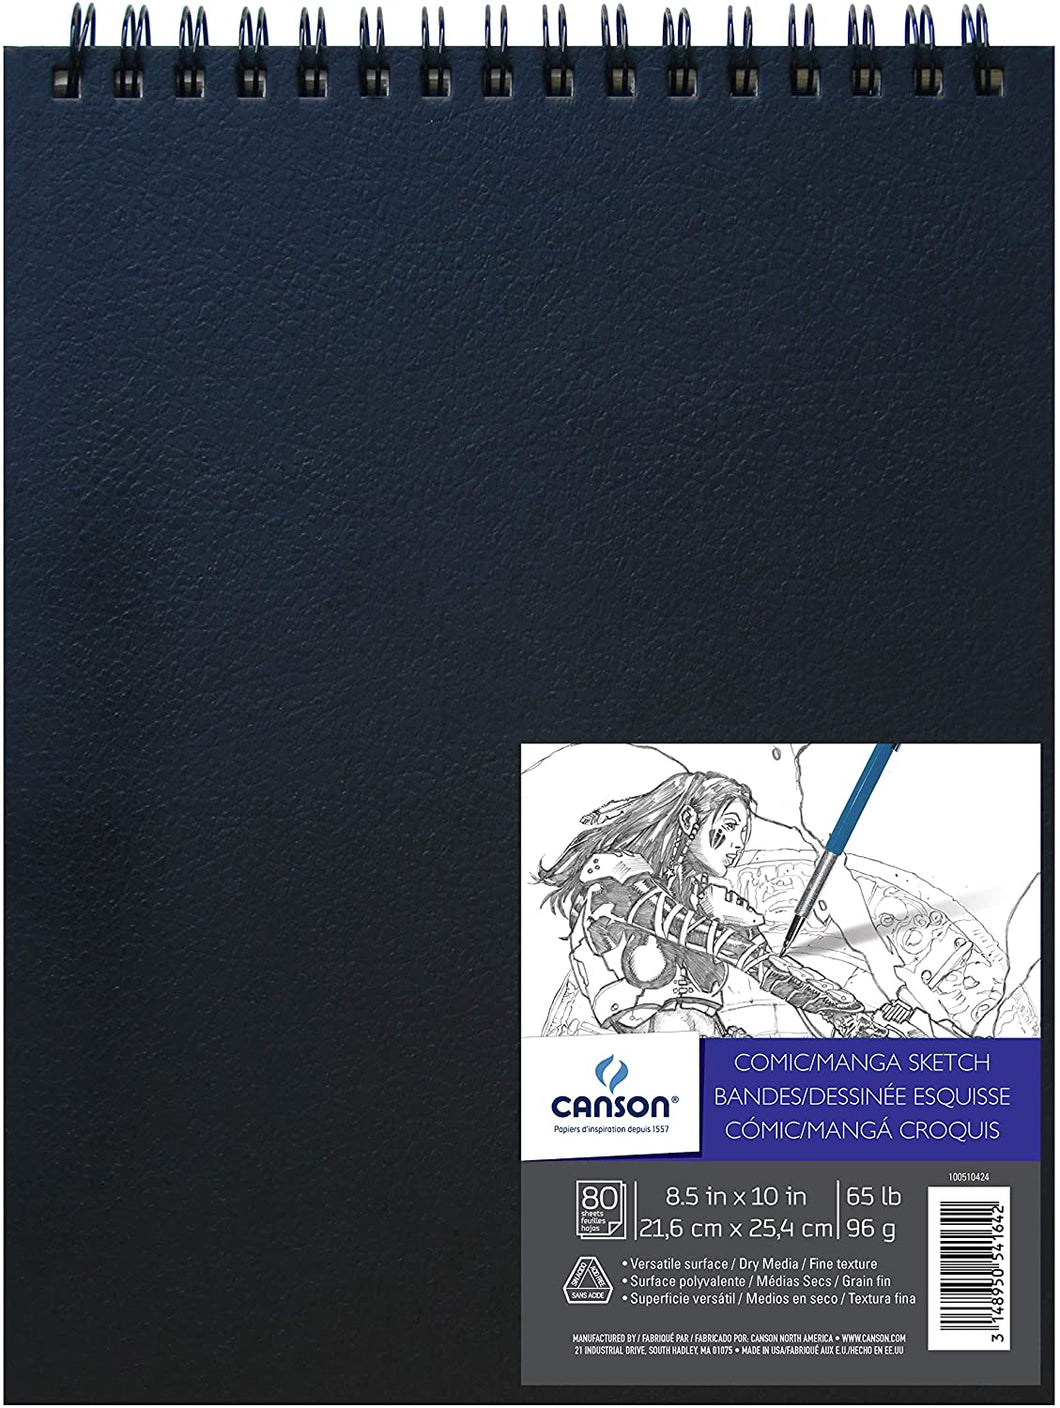 Canson Comic / Manga Sketch Book